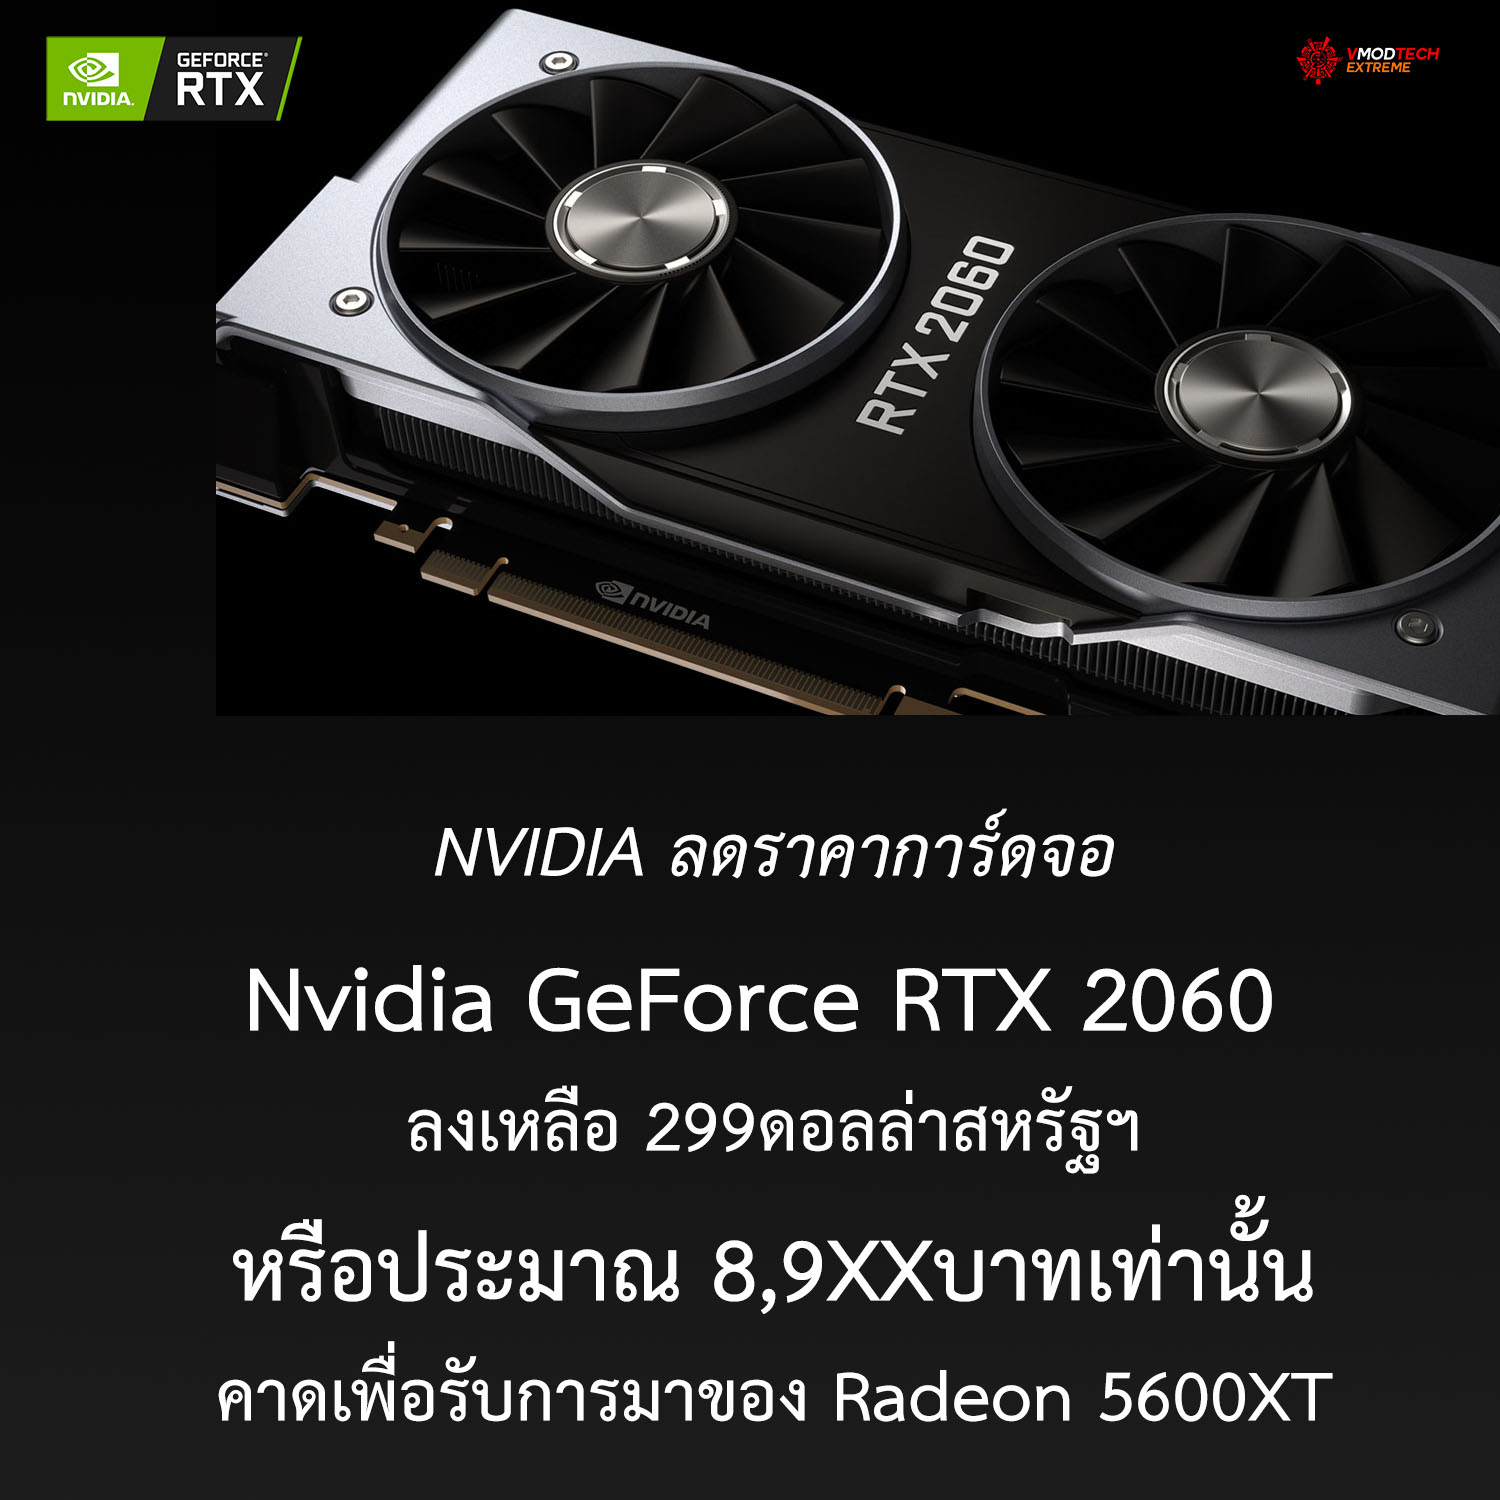 Nvidia ลดราคาการ์ดจอ GeForce RTX 2060 ลงเหลือ 299ดอลล่าสหรัฐฯเพื่อเตรียมรับการมาของ Radeon 5600XT 